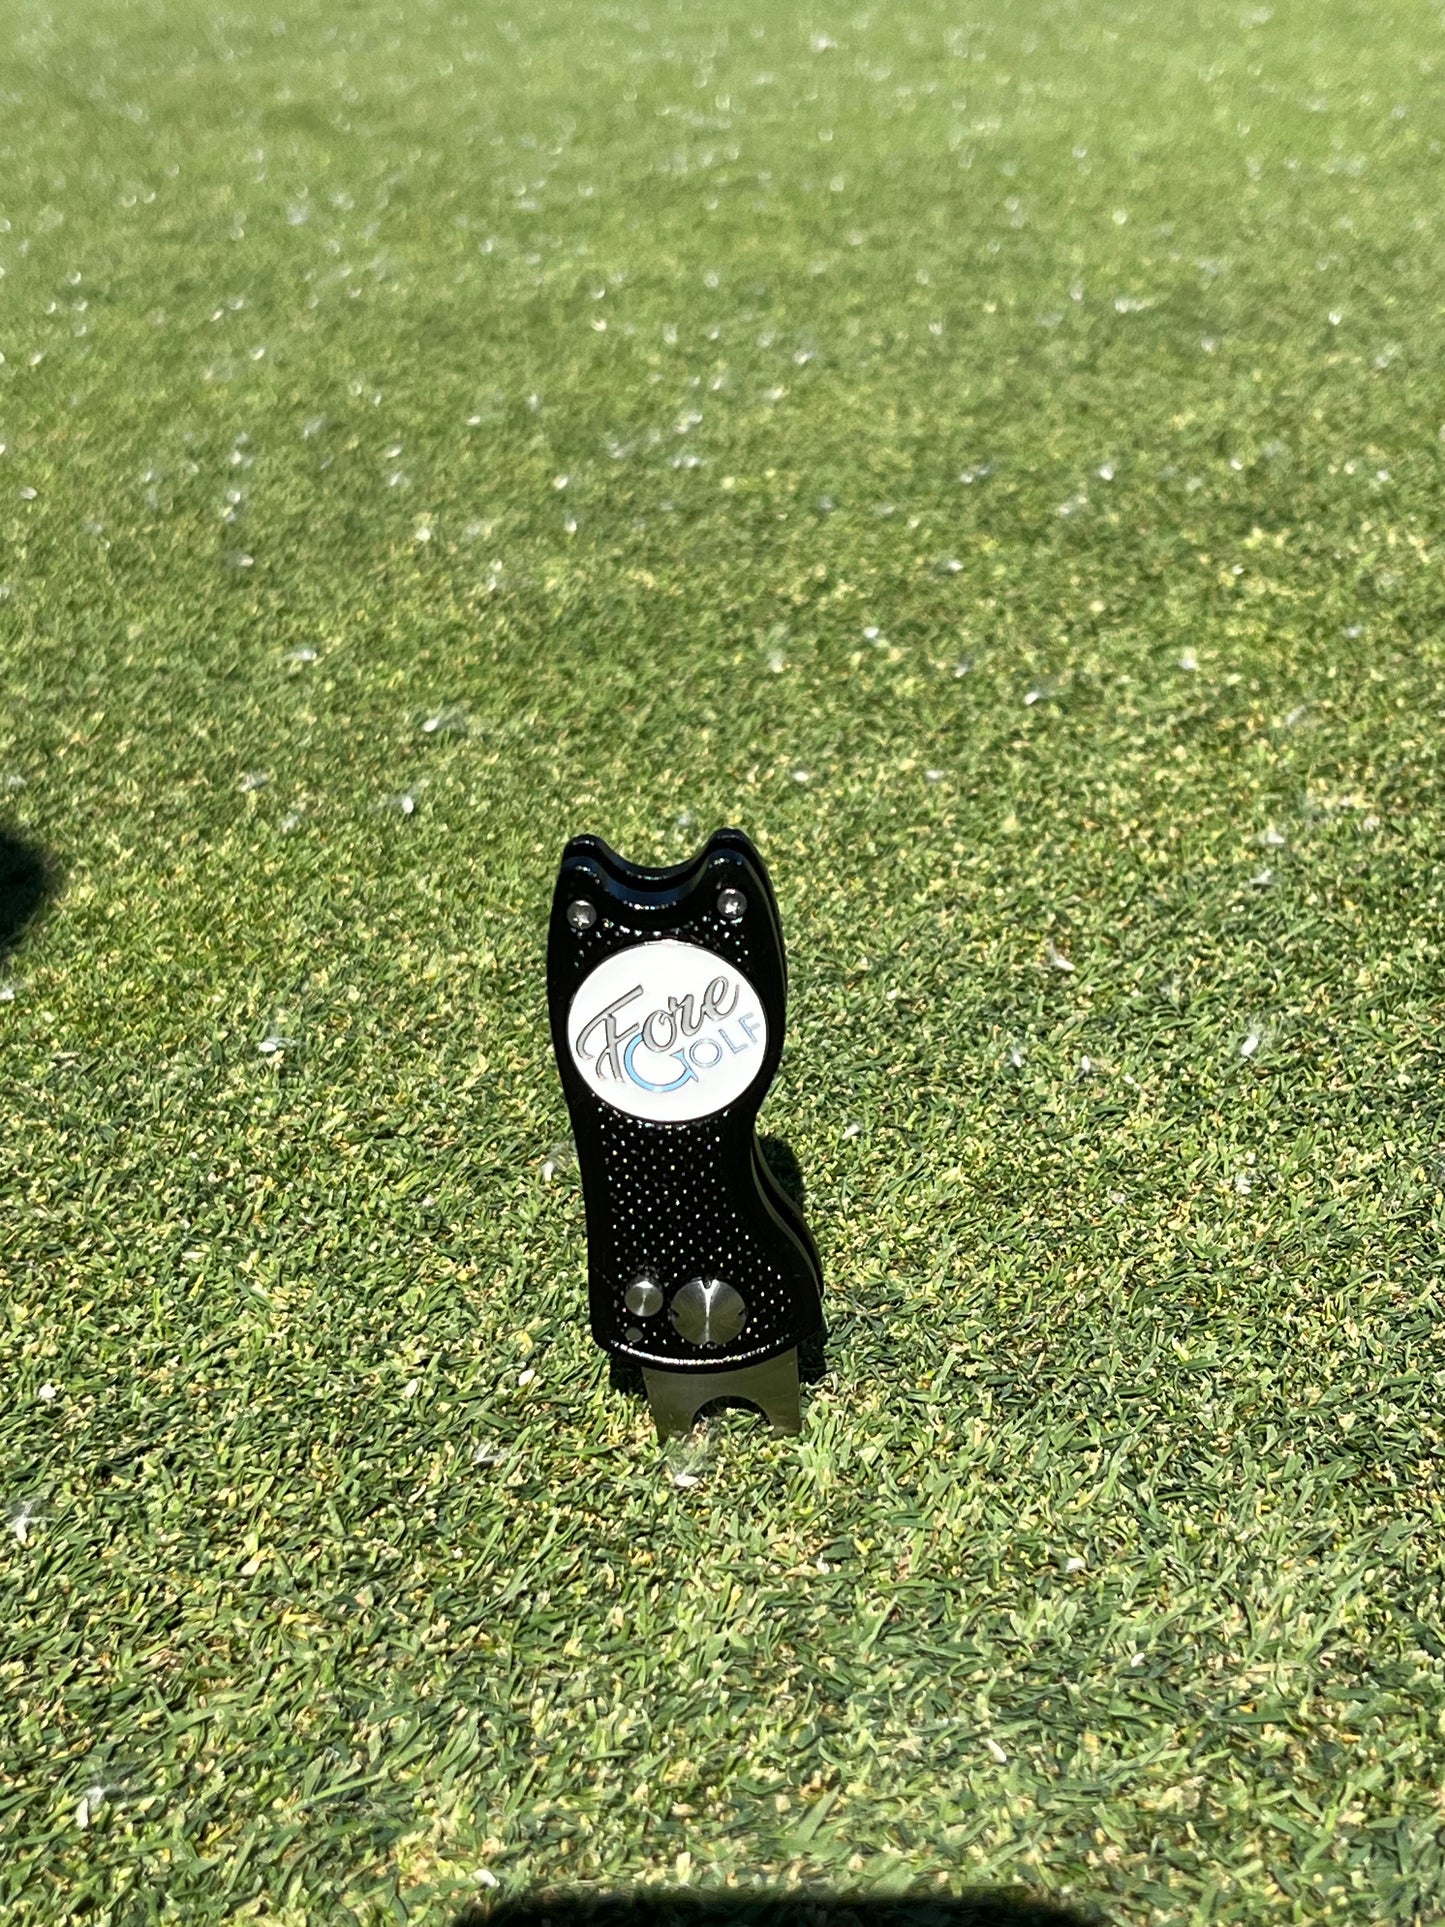 Fore Golf Divot Tool w/ Ball Marker